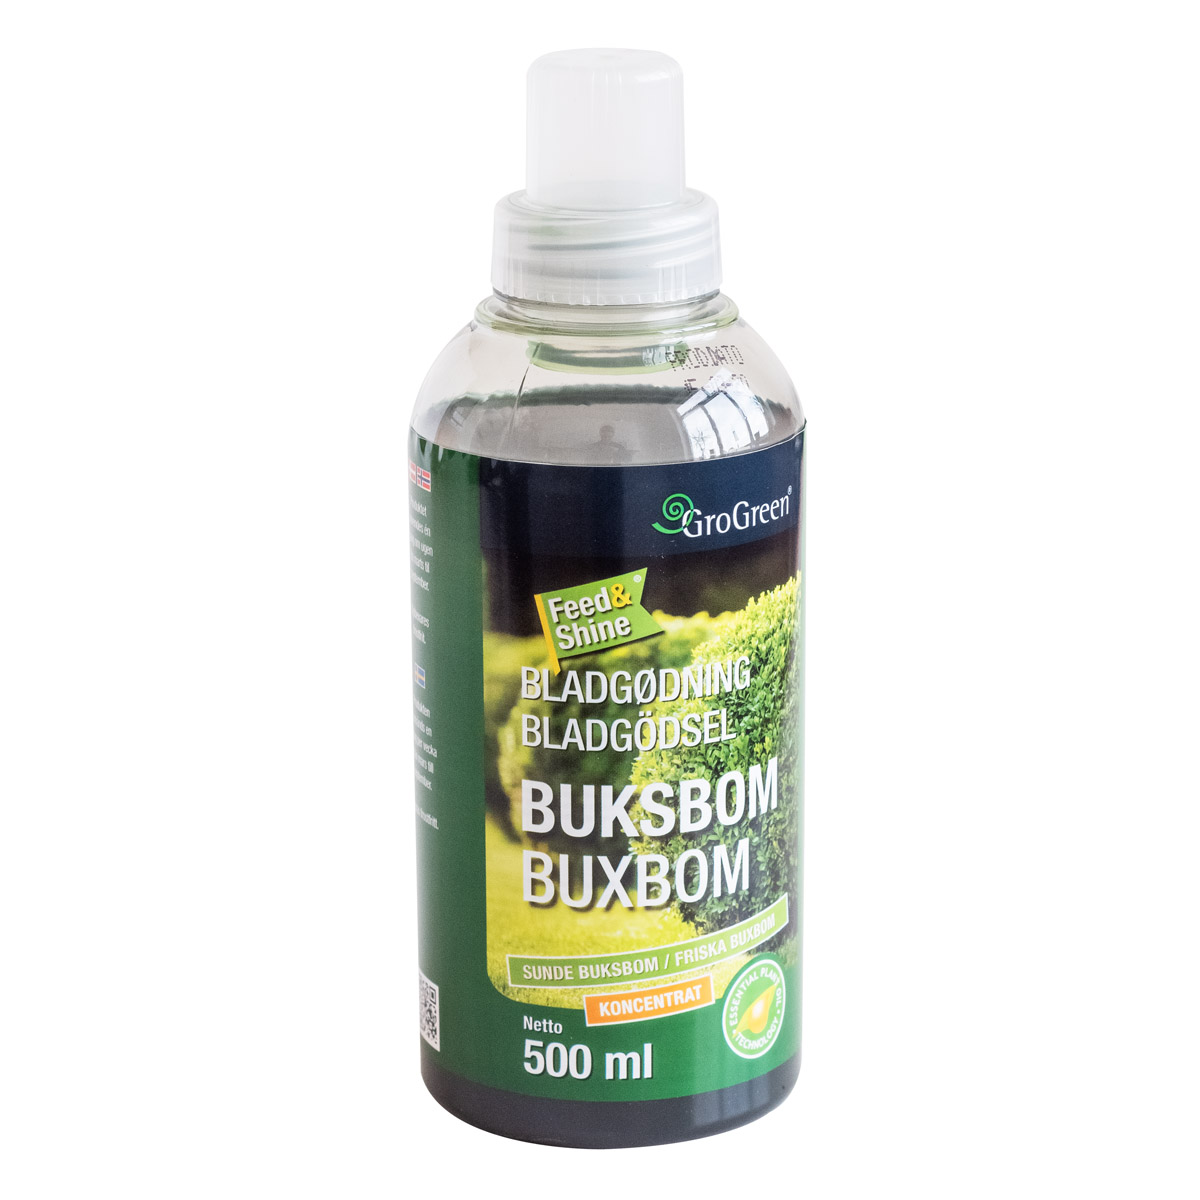 Buxbom bladnäring Feed & Shine 500ml koncentrat